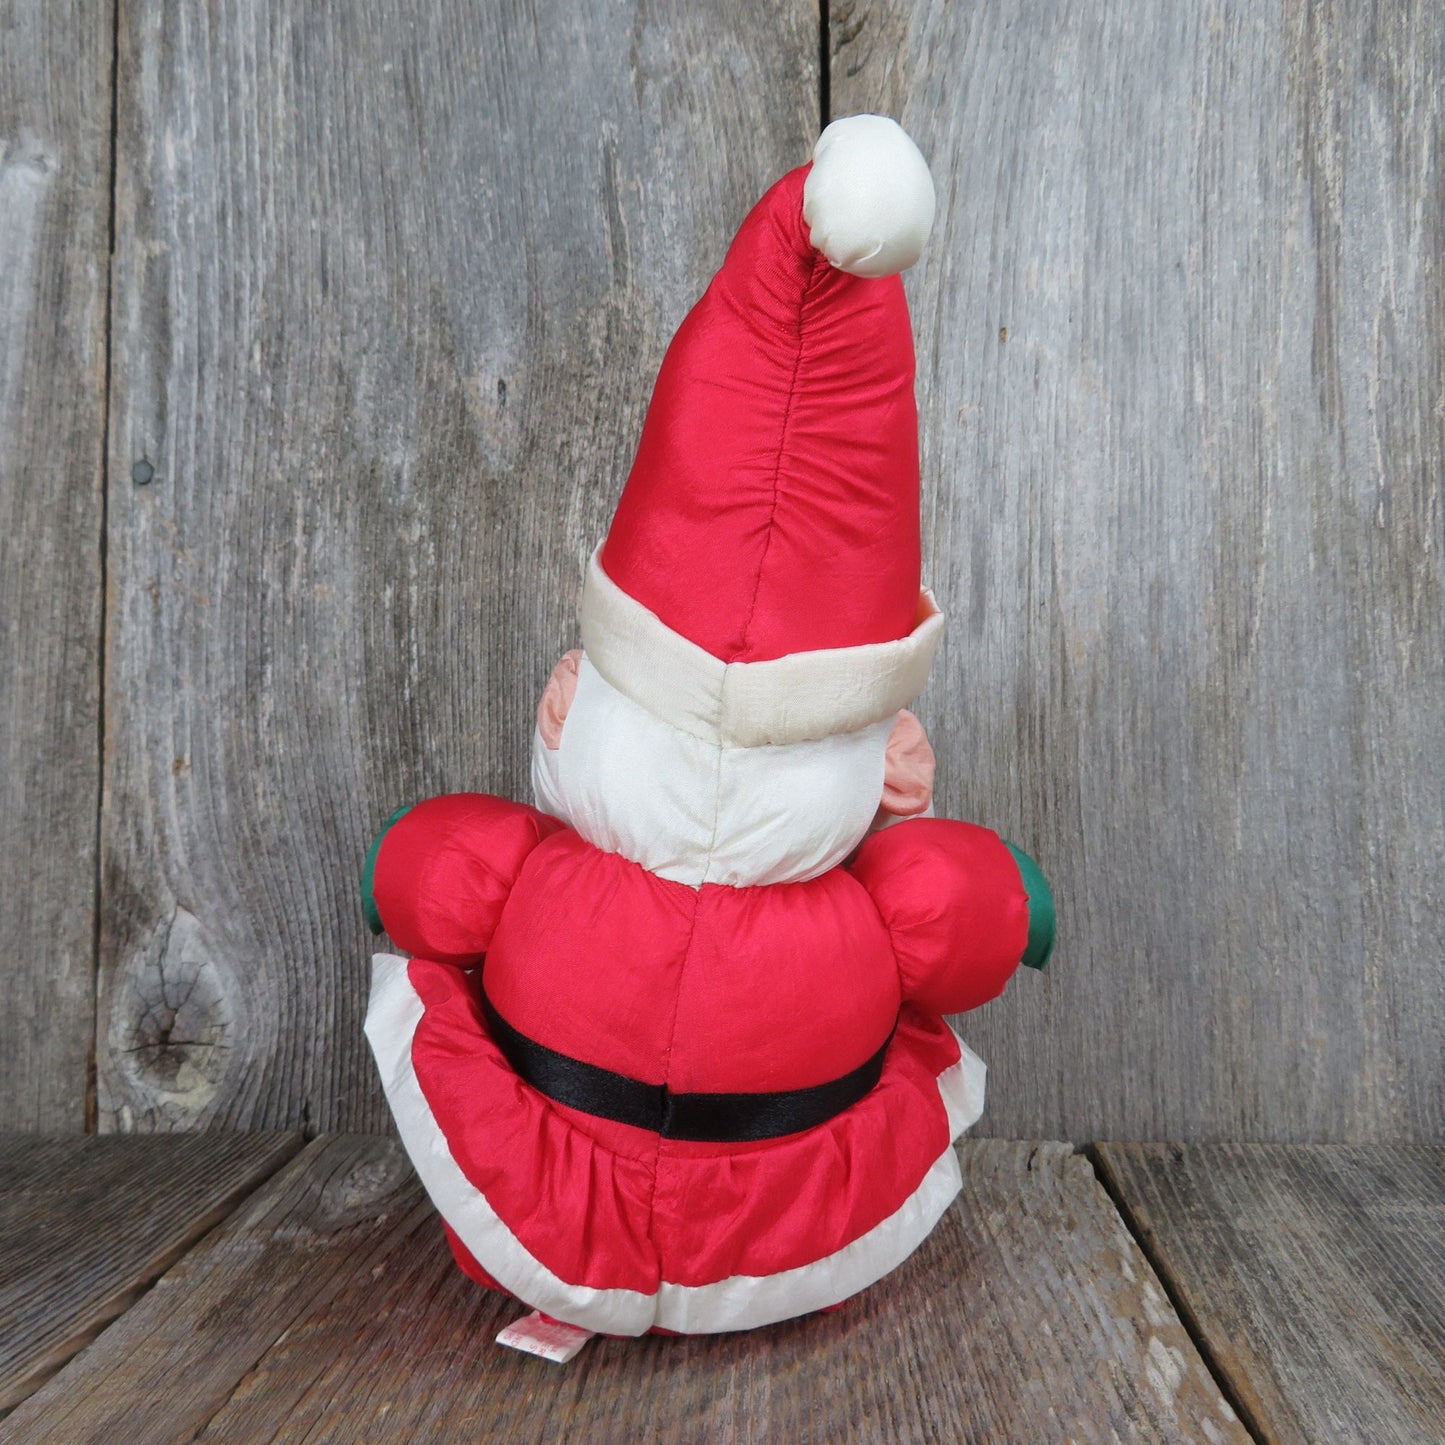 Vintage Santa Claus Plush Slick Nylon Christmas Stuffed Animal Doll